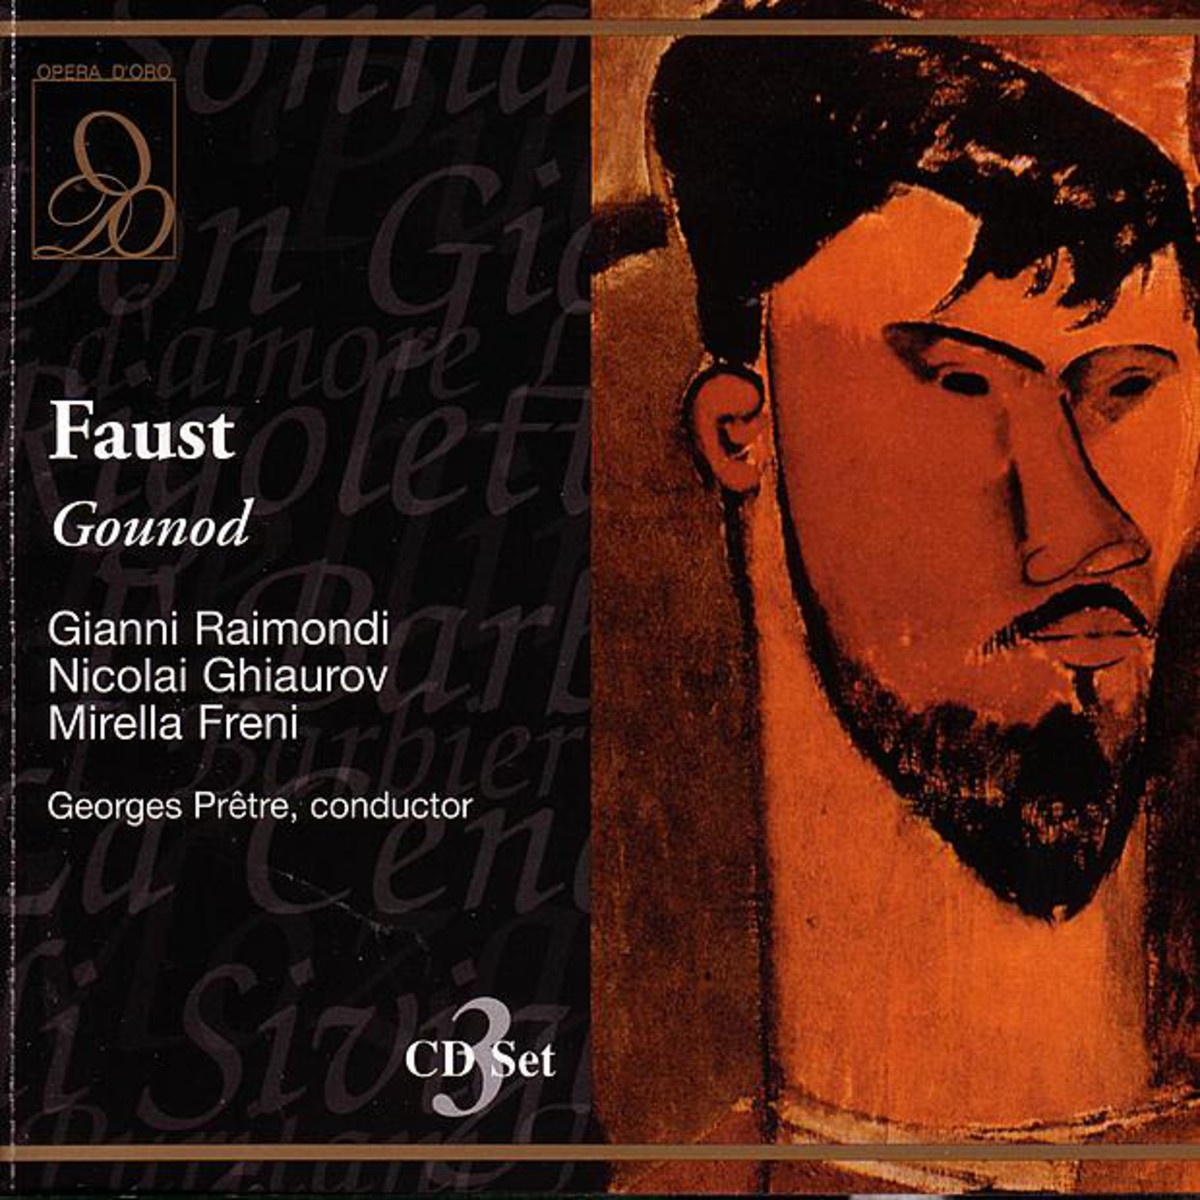 Faust 1986 Digital Remaster, Act II, O sainte me daille...................: Le veau d' or Me phistophe le s Choeur